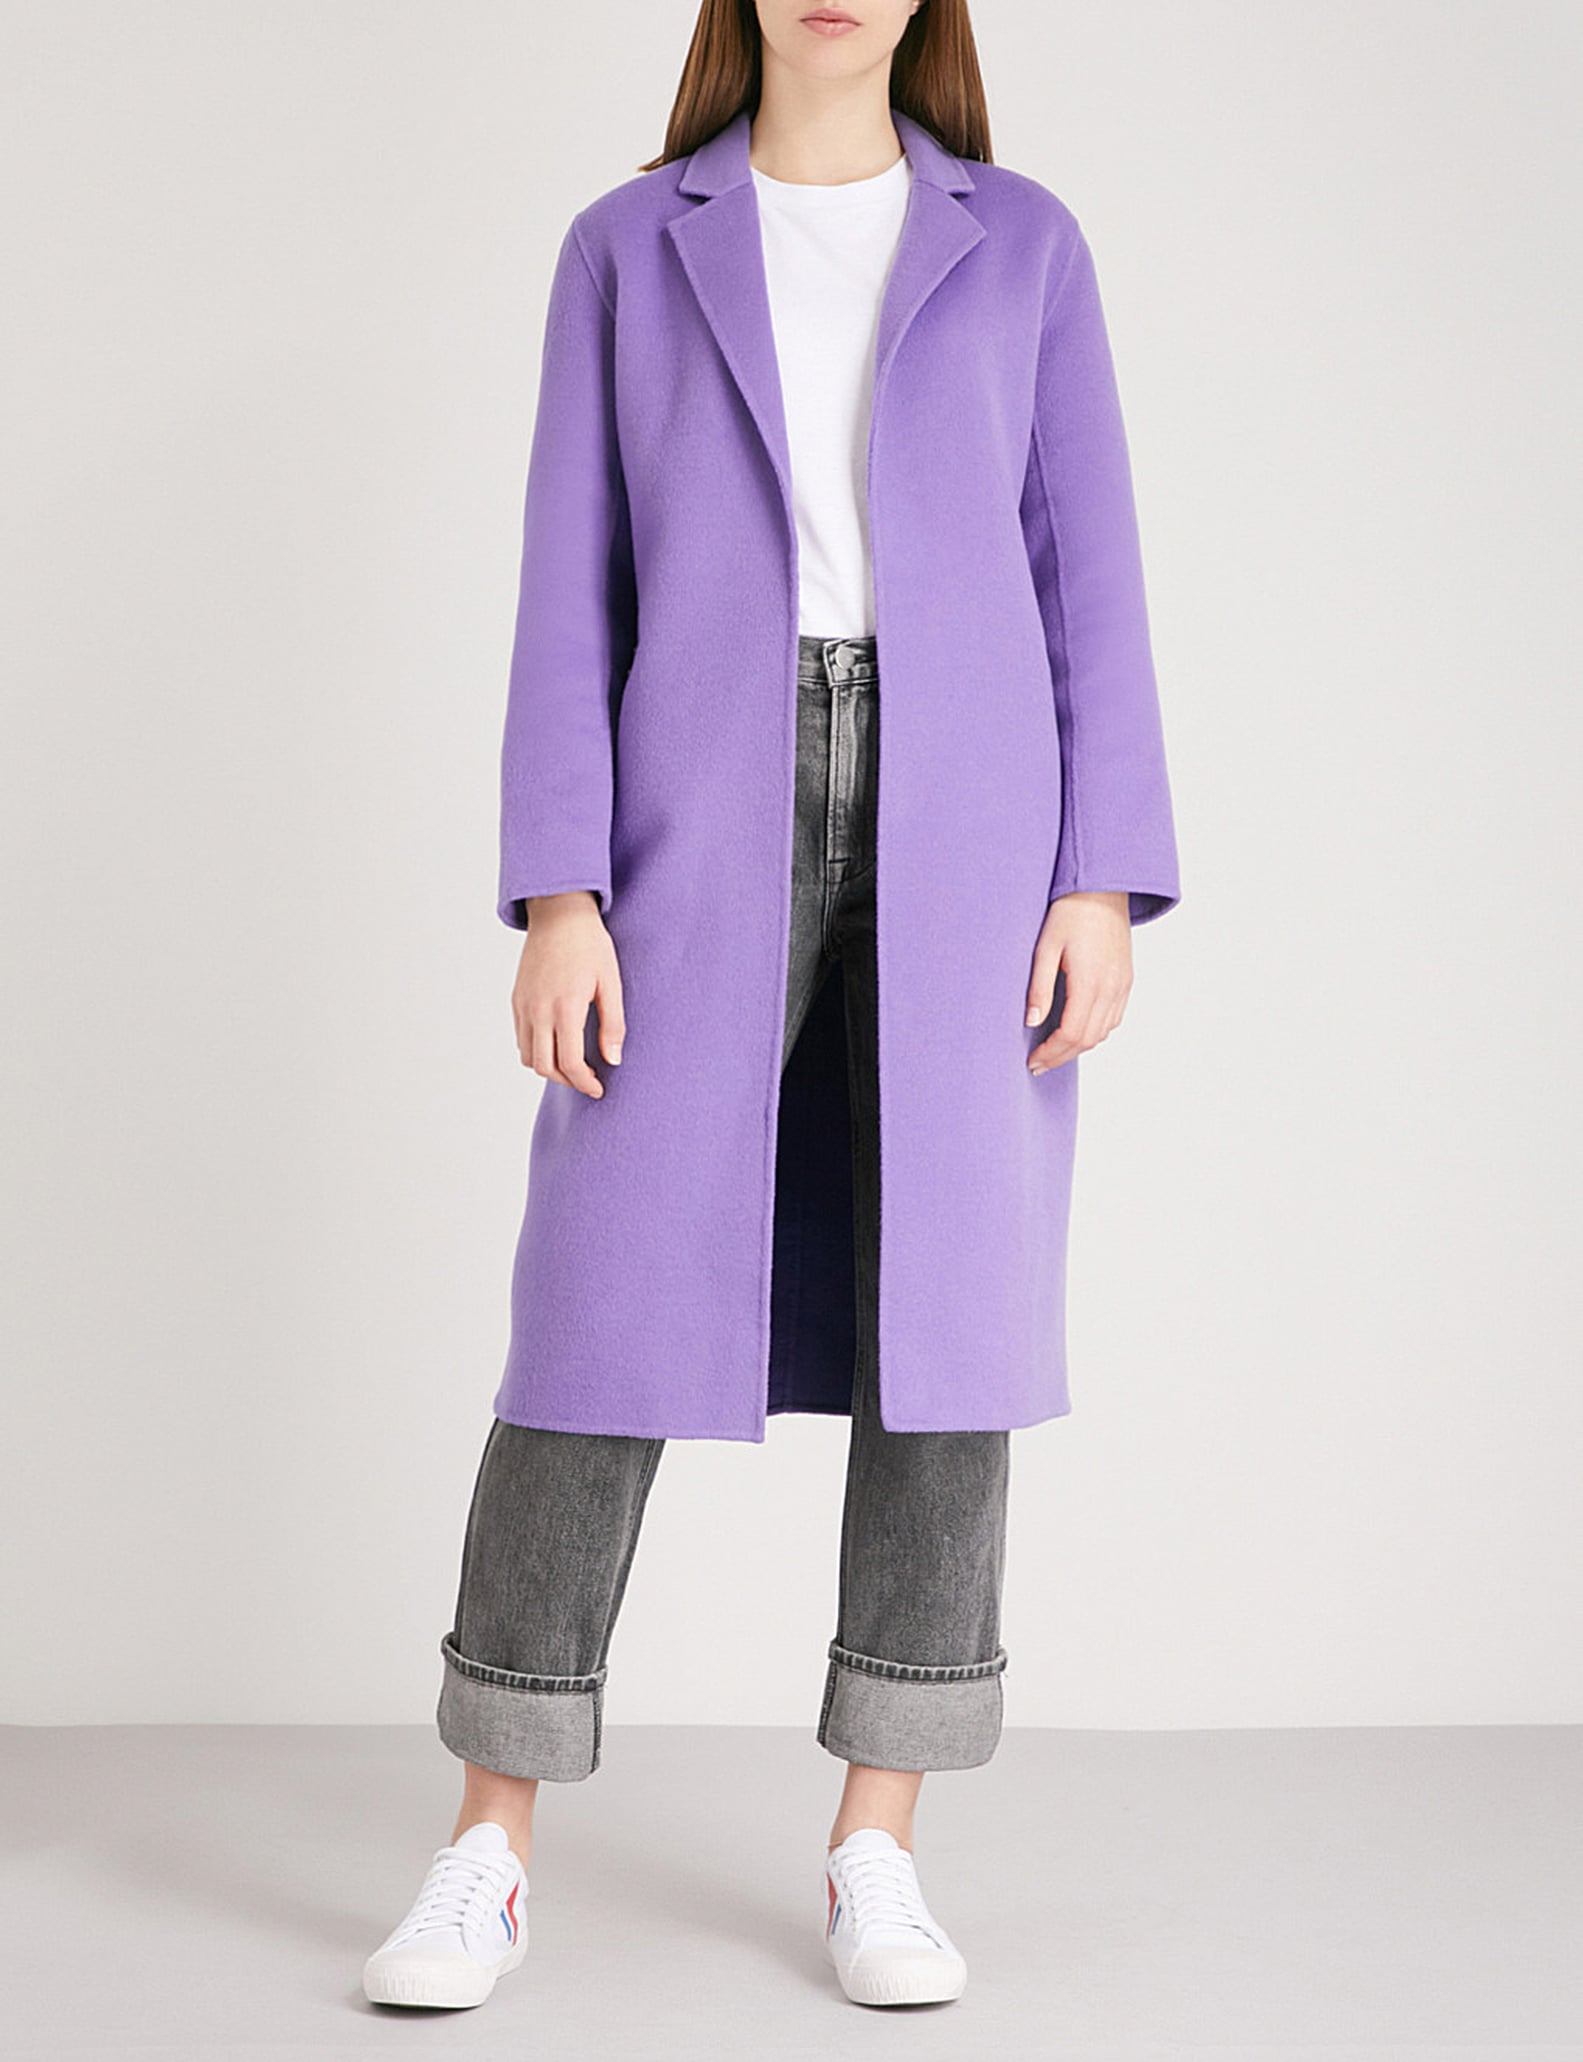 Pippa Middleton Wearing a Lavender Coat | POPSUGAR Fashion